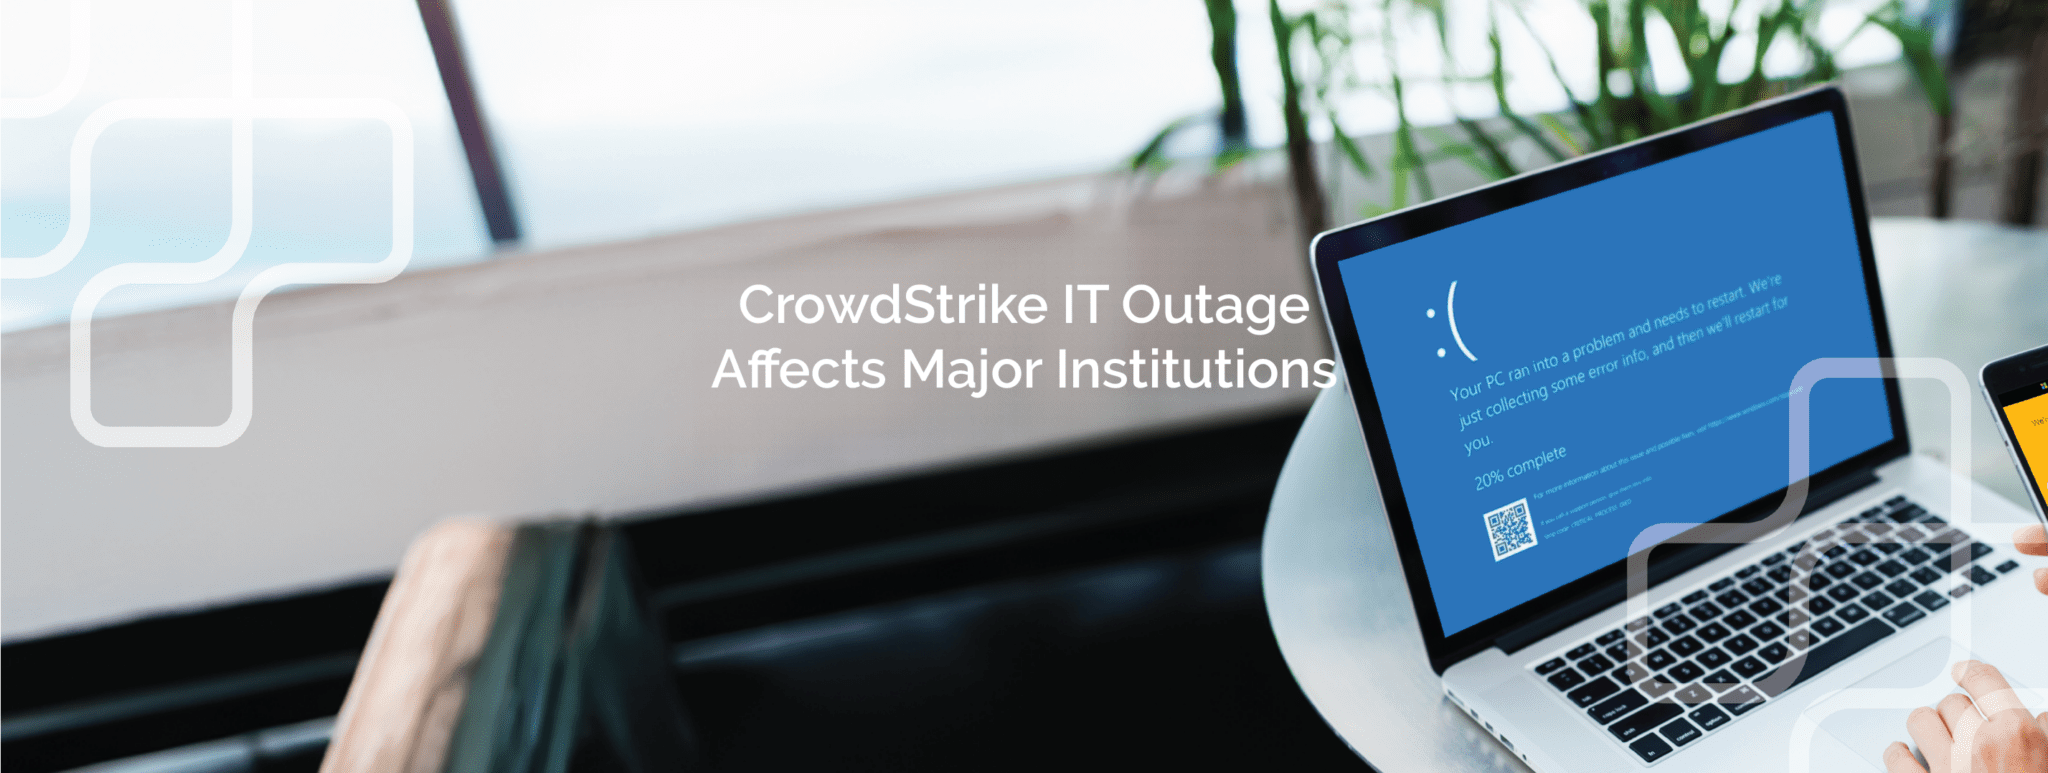 CrowdStrike Outage Blog Image